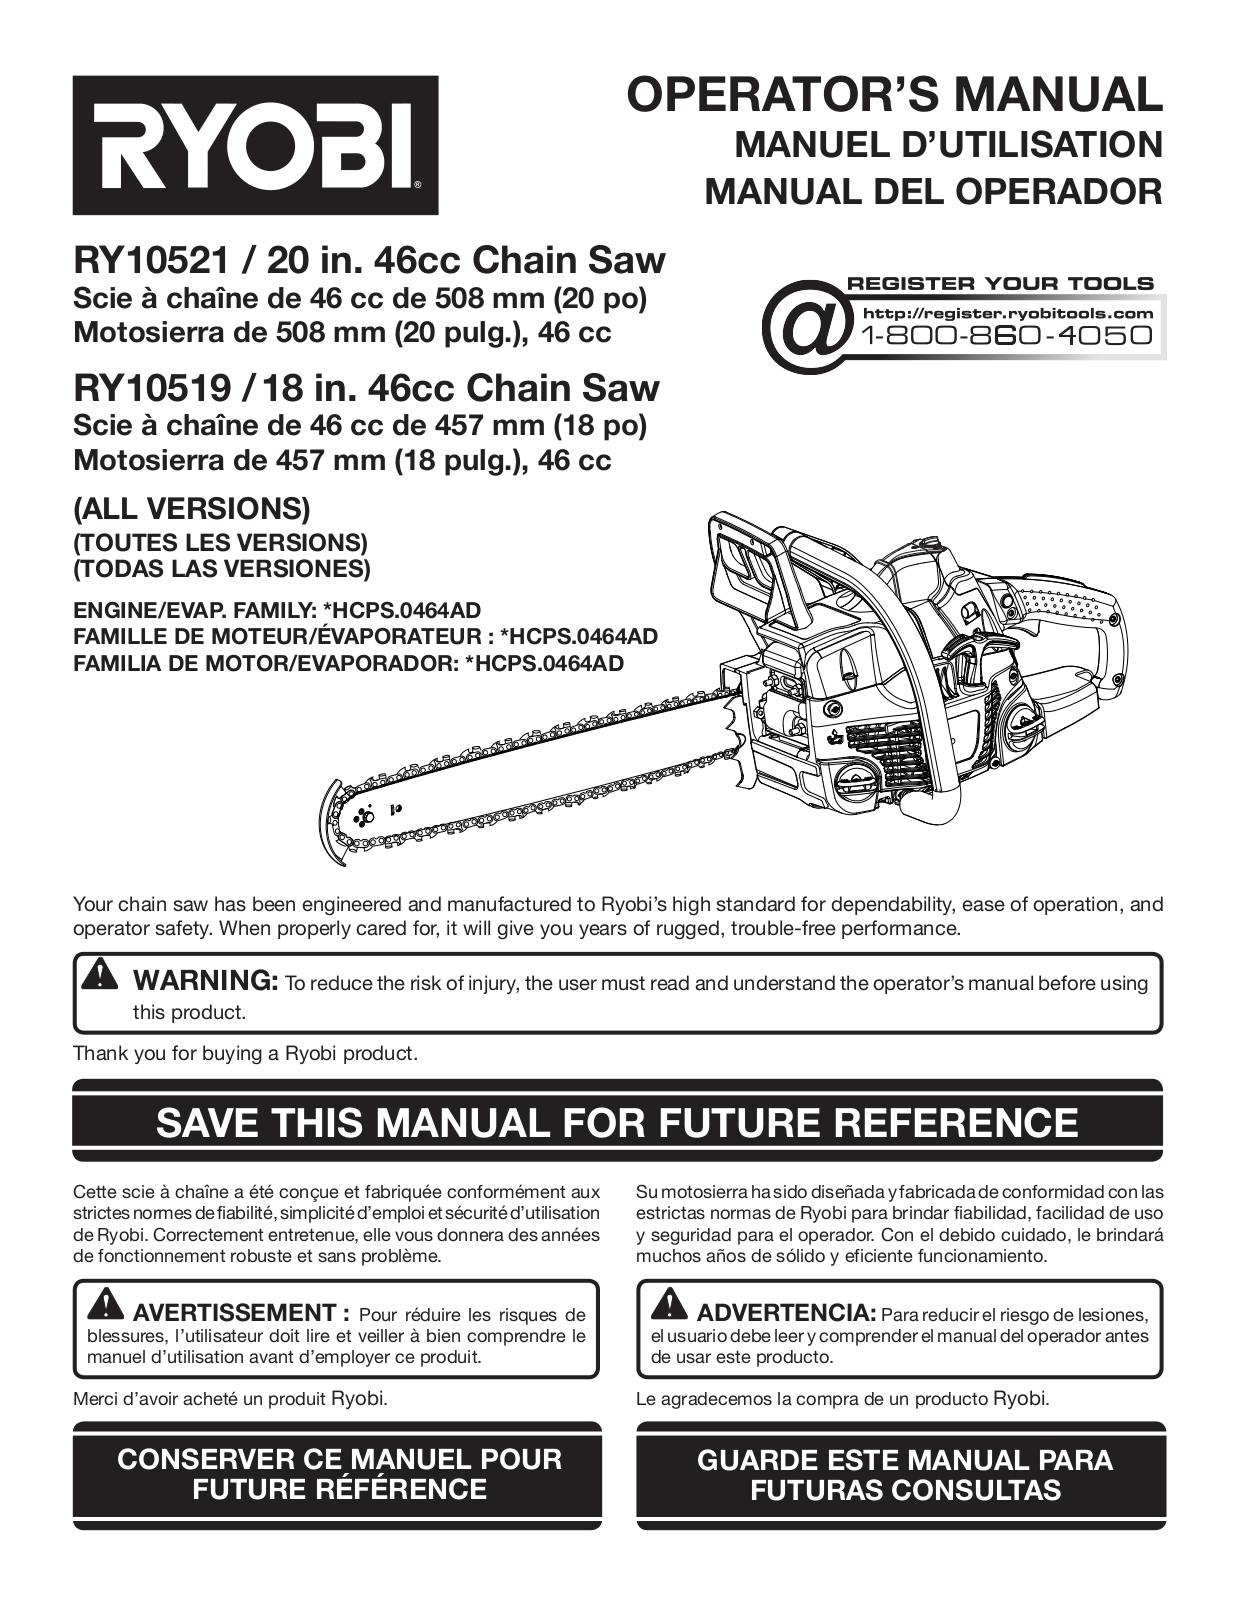 Ryobi RY10519, RY10521 Owner's Manual